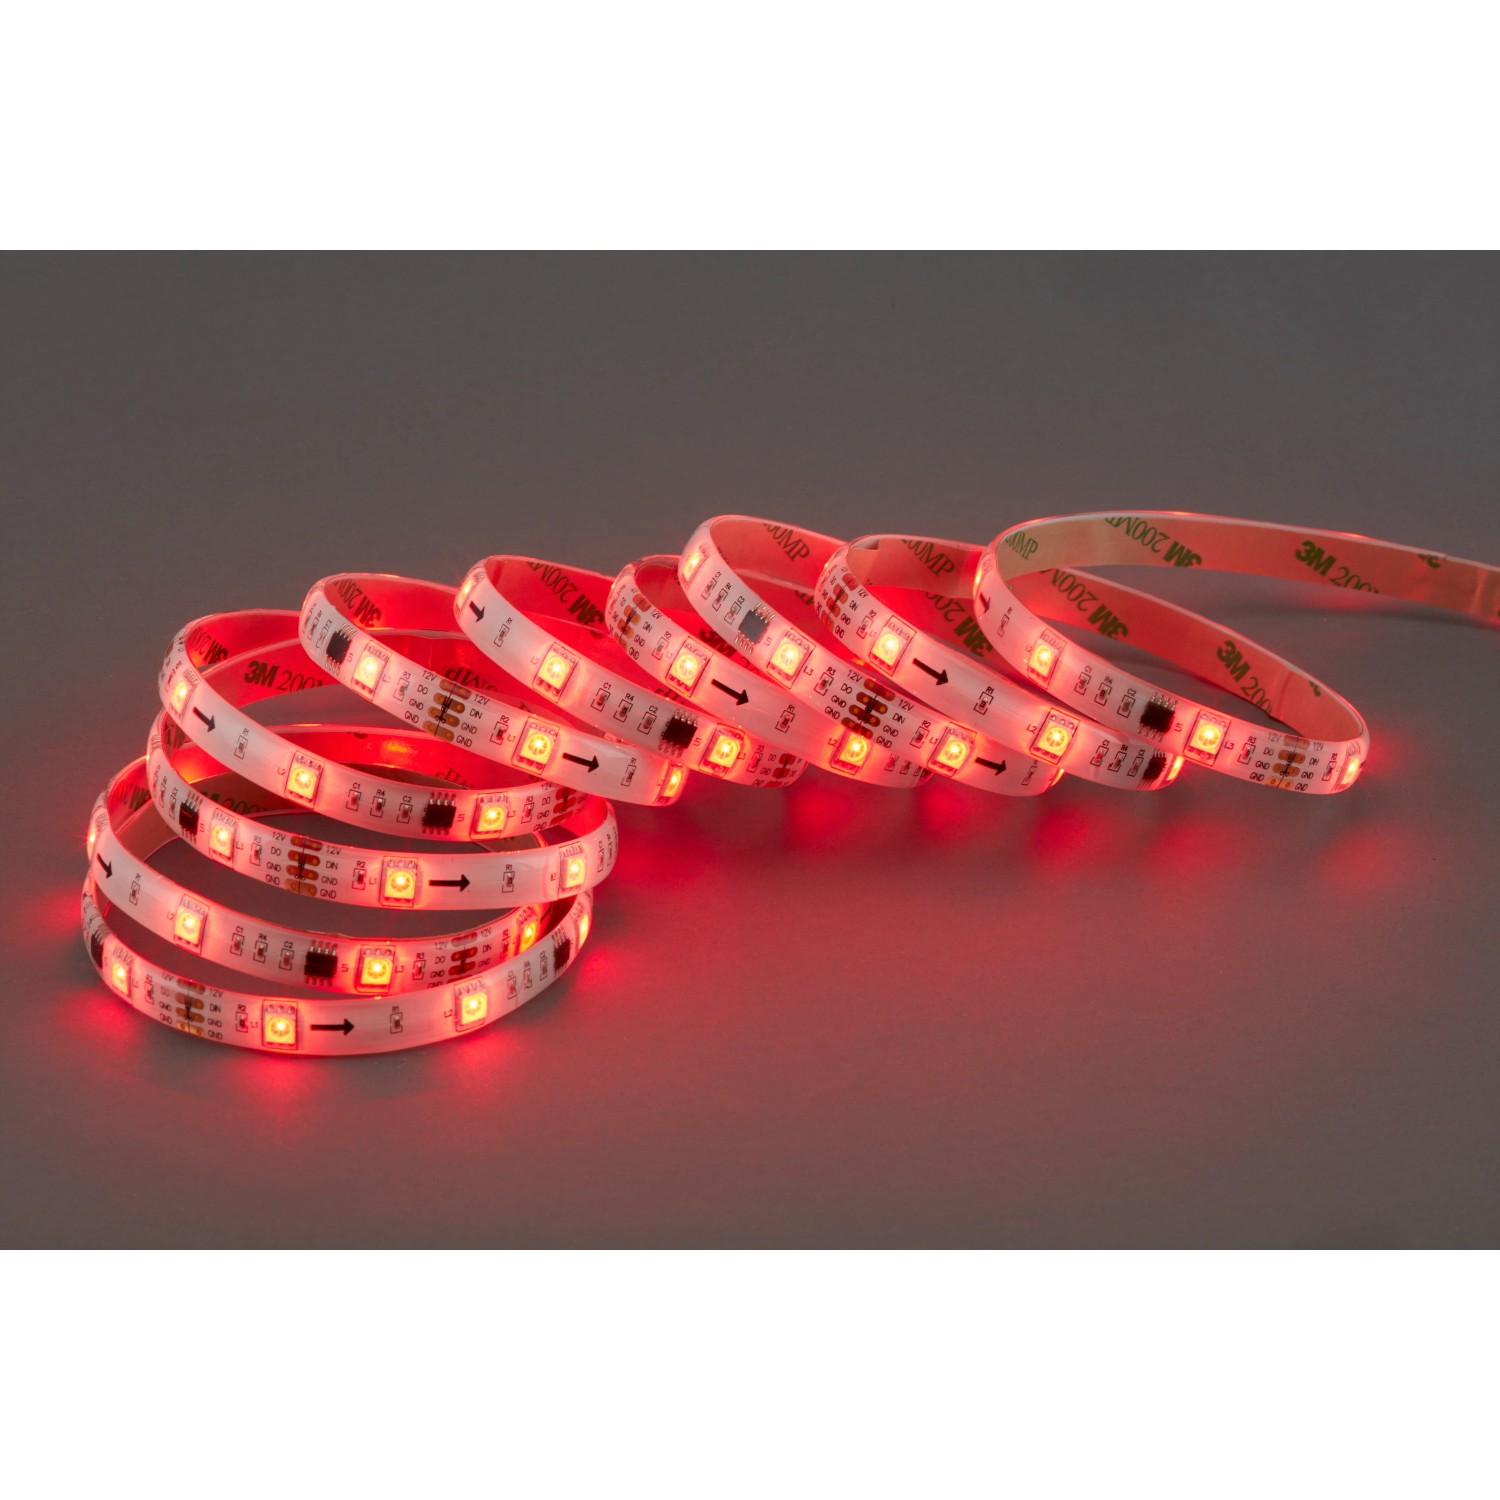 Mehrfarbiges LED-Leuchtarmband - 9 Modi zur Auswahl